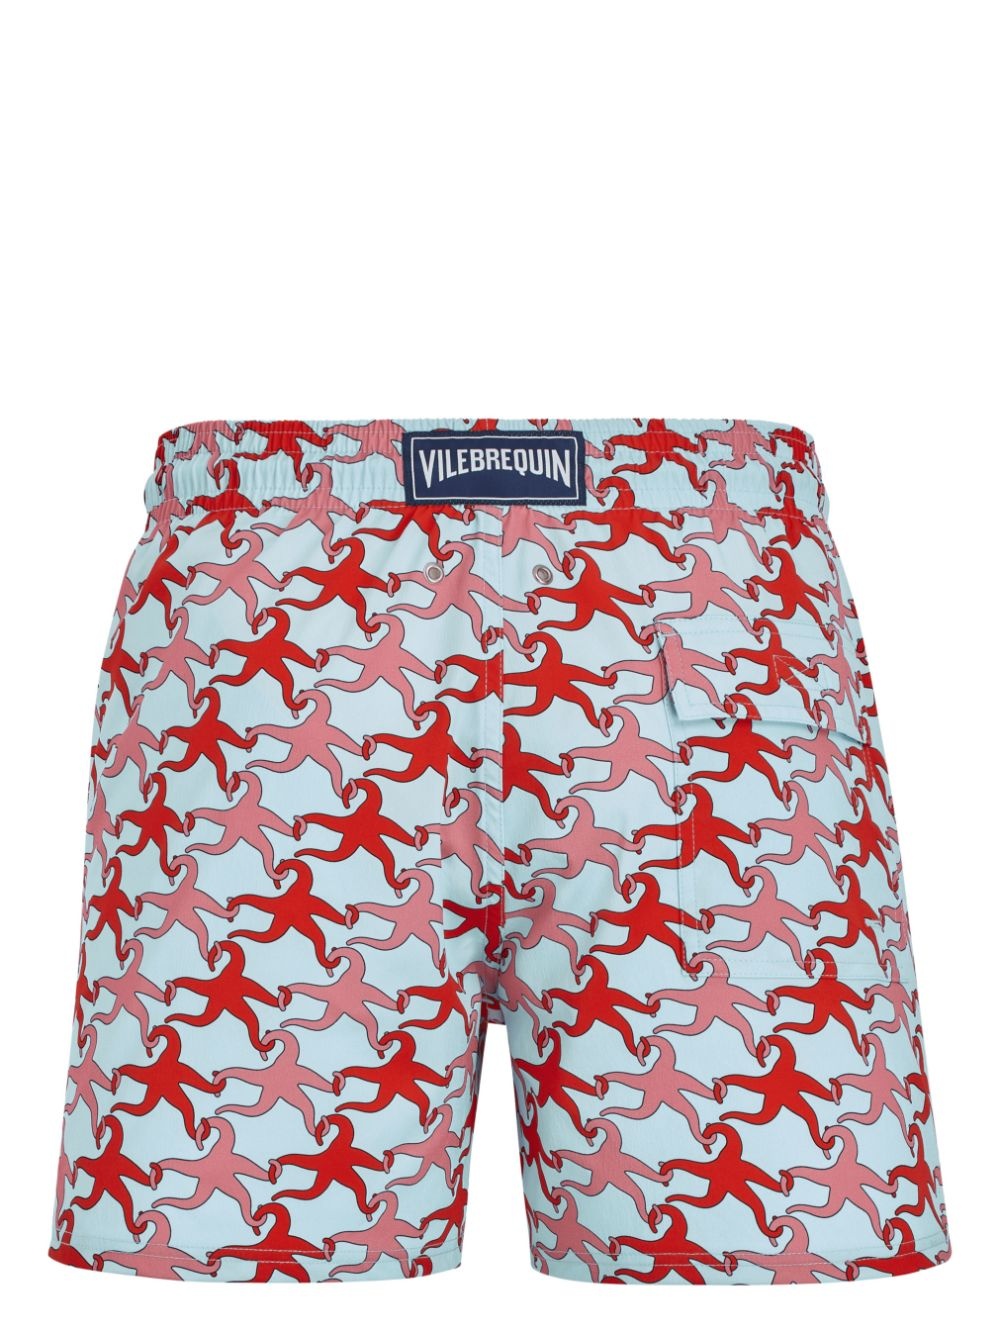 Valentine Stars swim shorts - 2